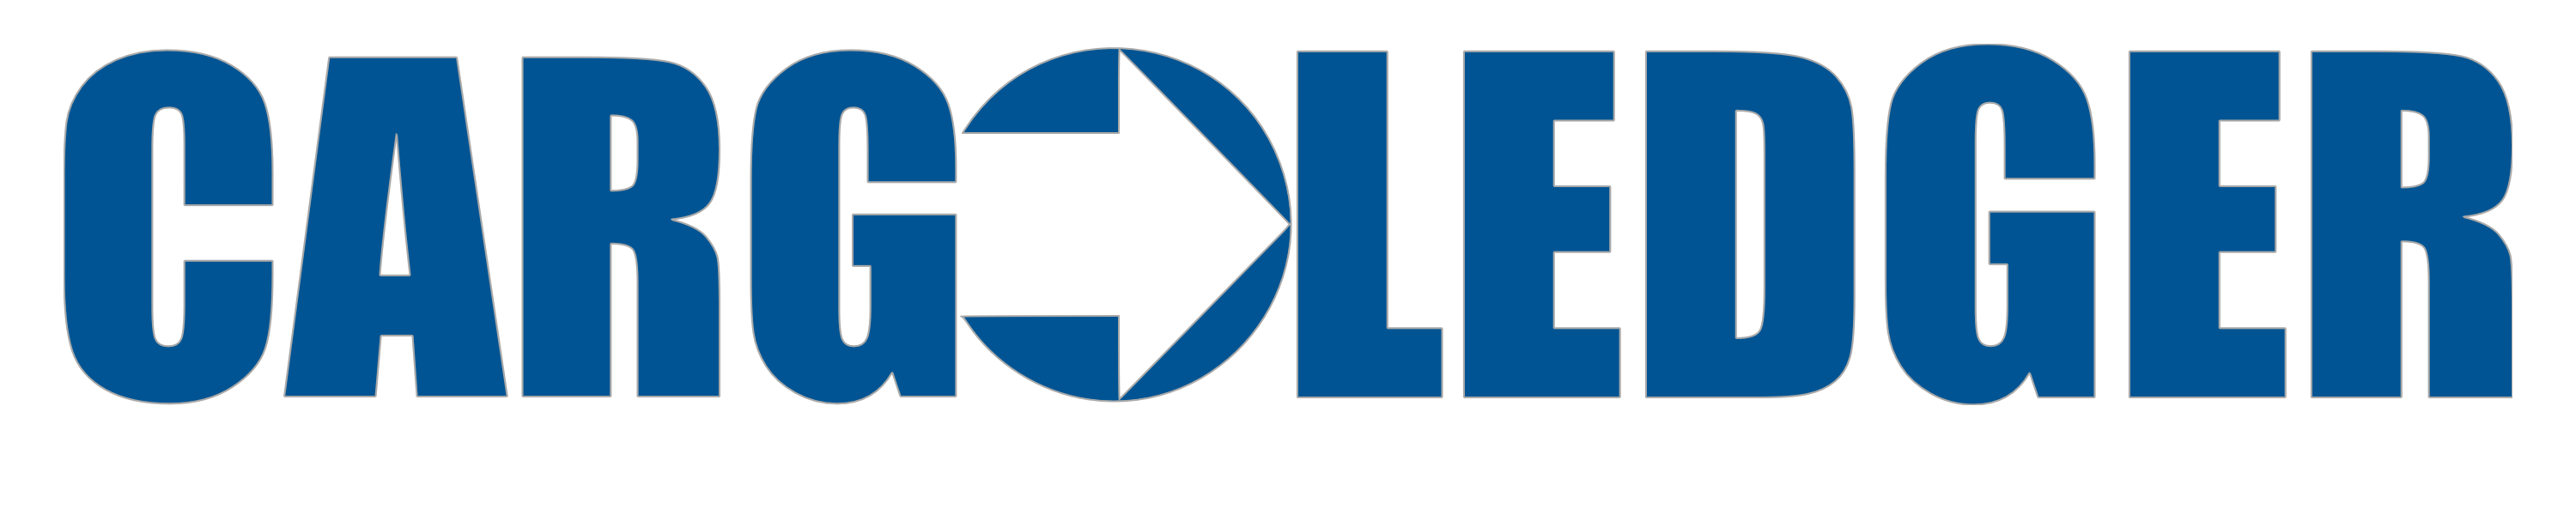 cargo ledger logo 